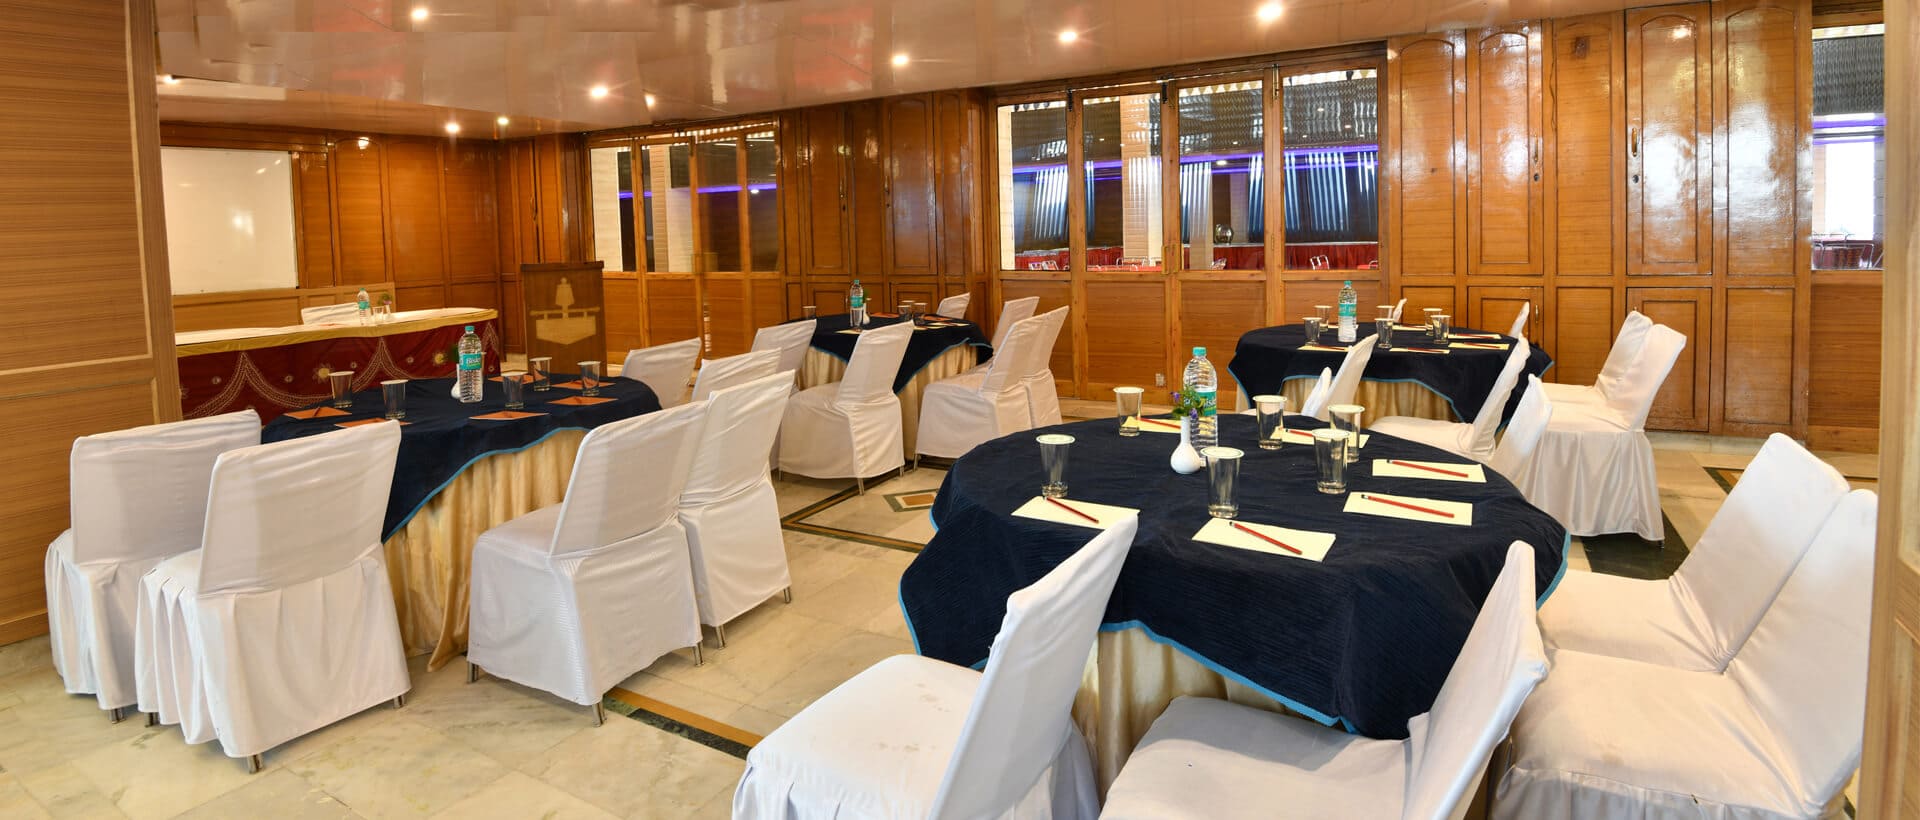 Dynasty Resort Business Meeting room